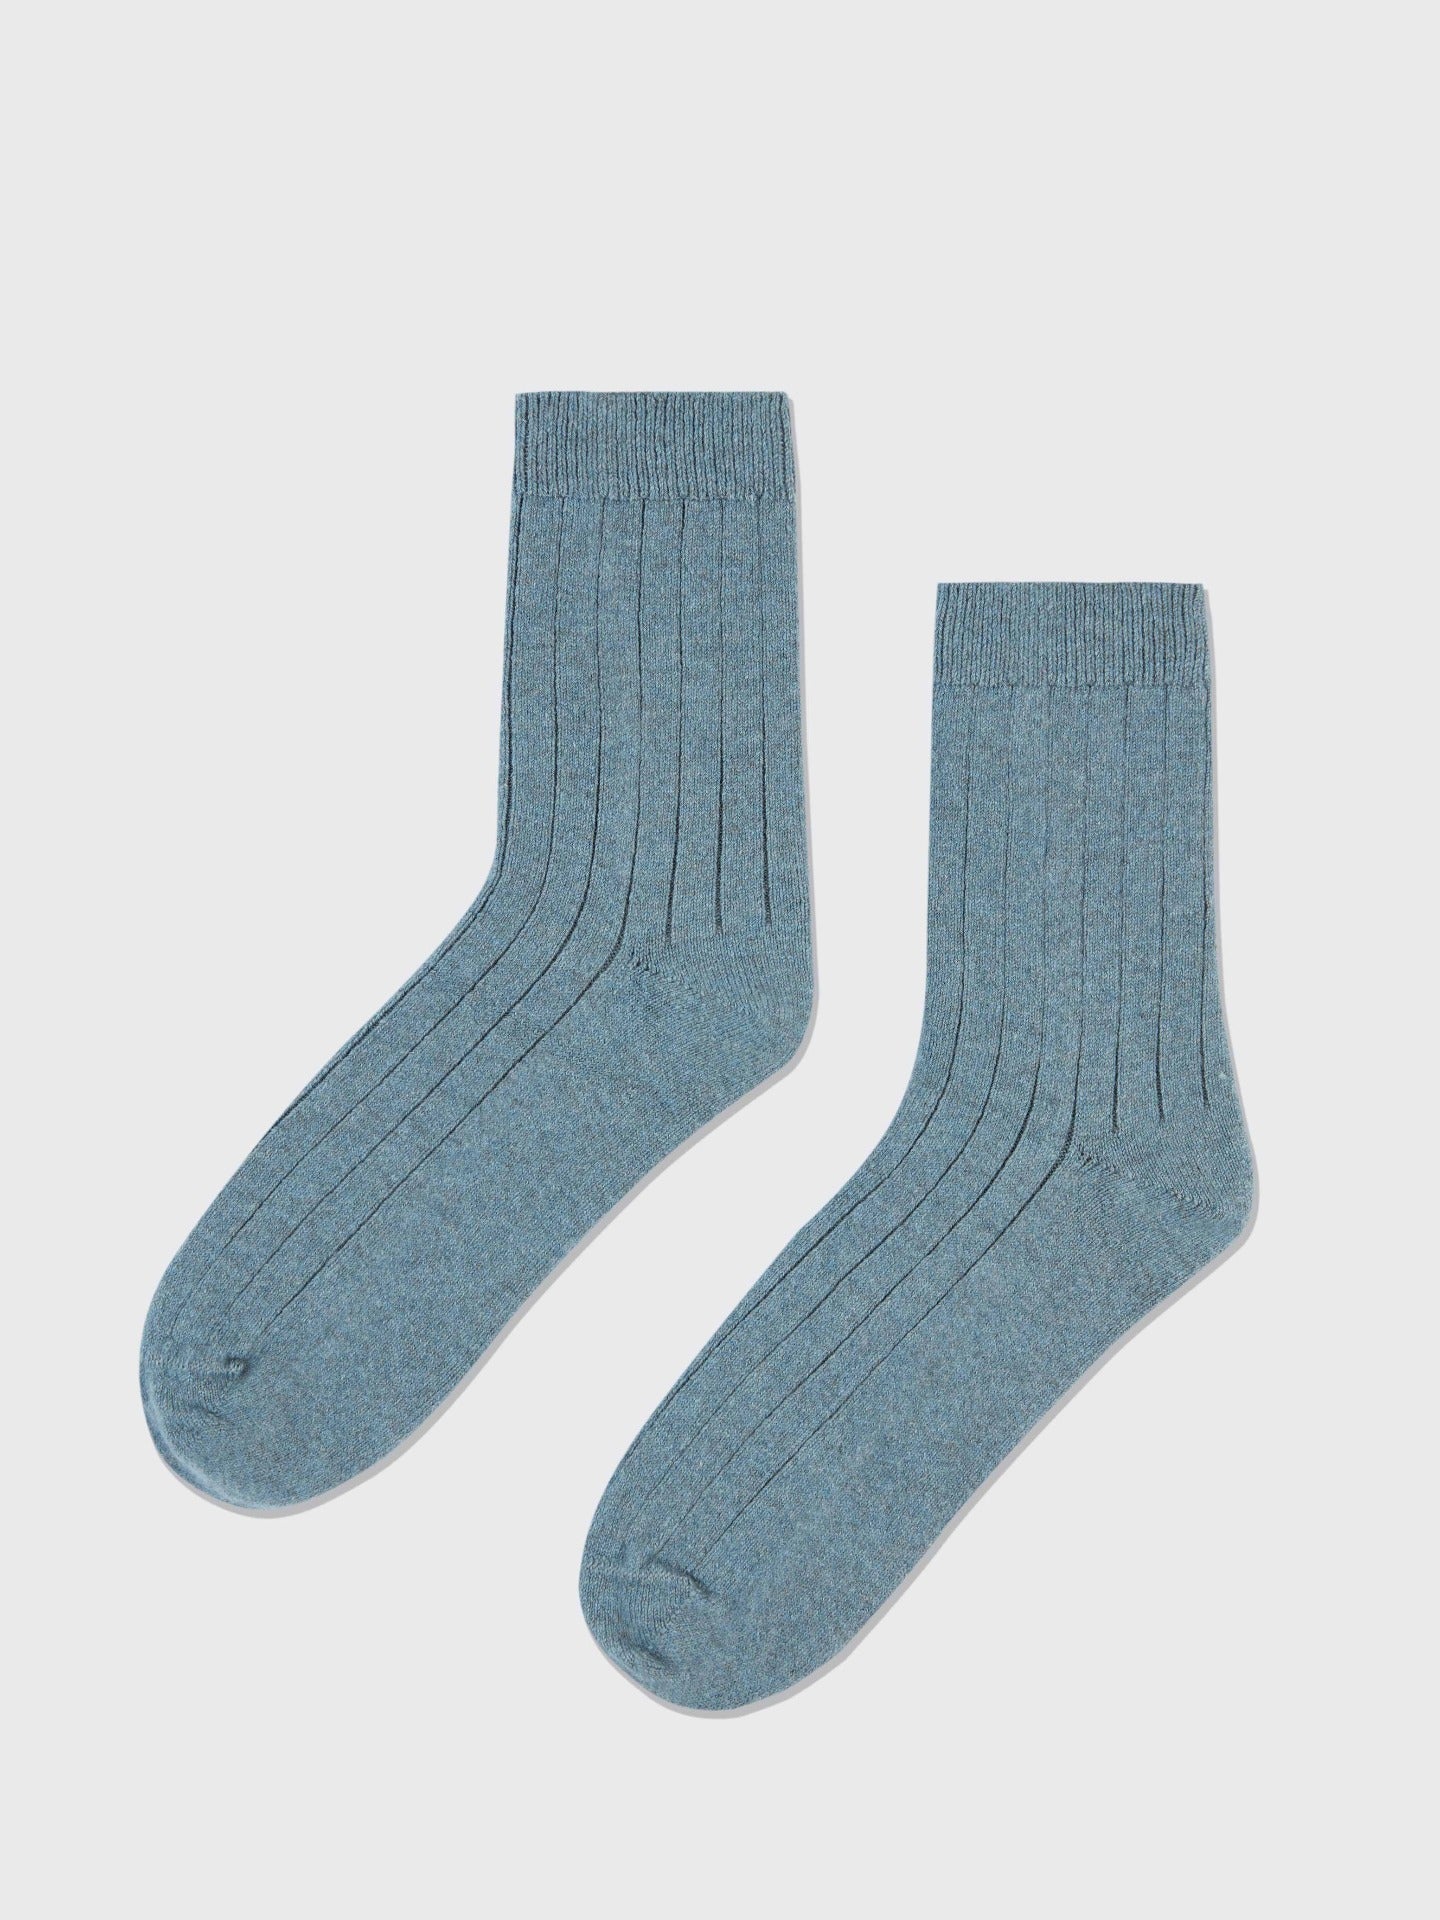 Organic Color Unisex Cashmere Trim Knit Bed Socks Grey - Gobi Cashmere